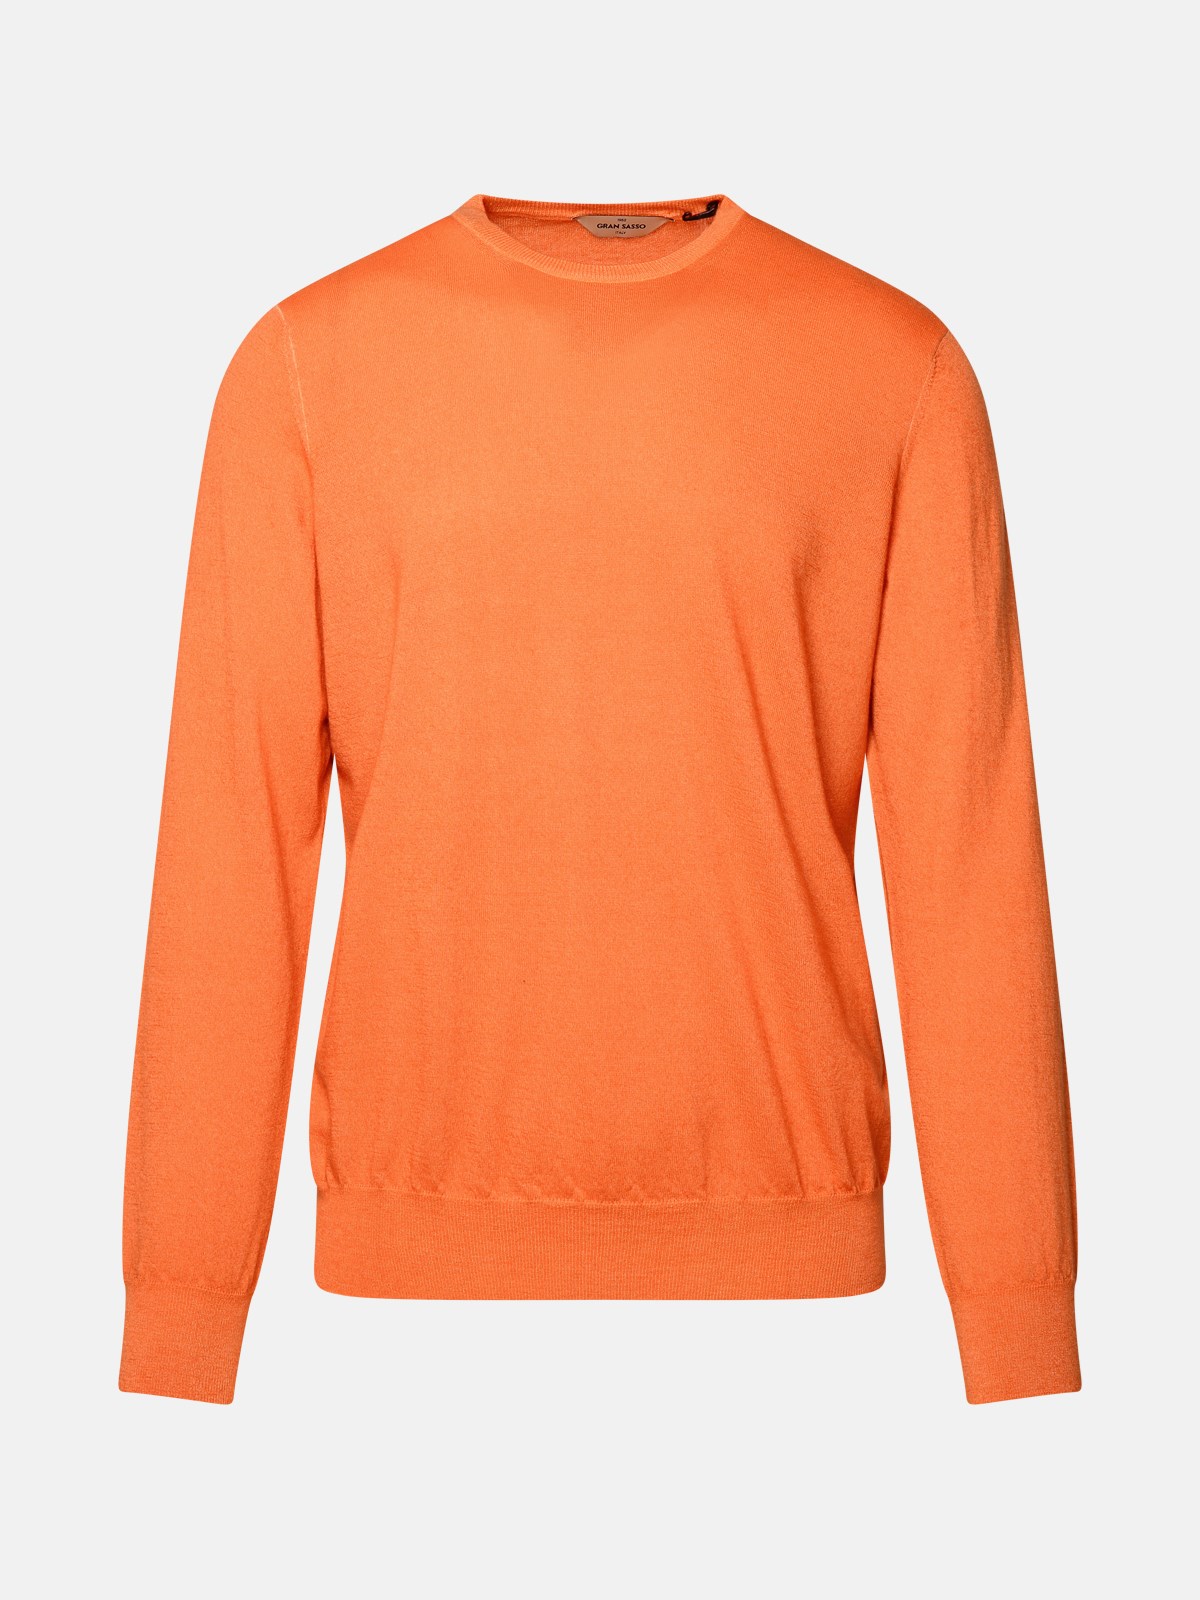 Shop Gran Sasso Orange Cashmere Sweater